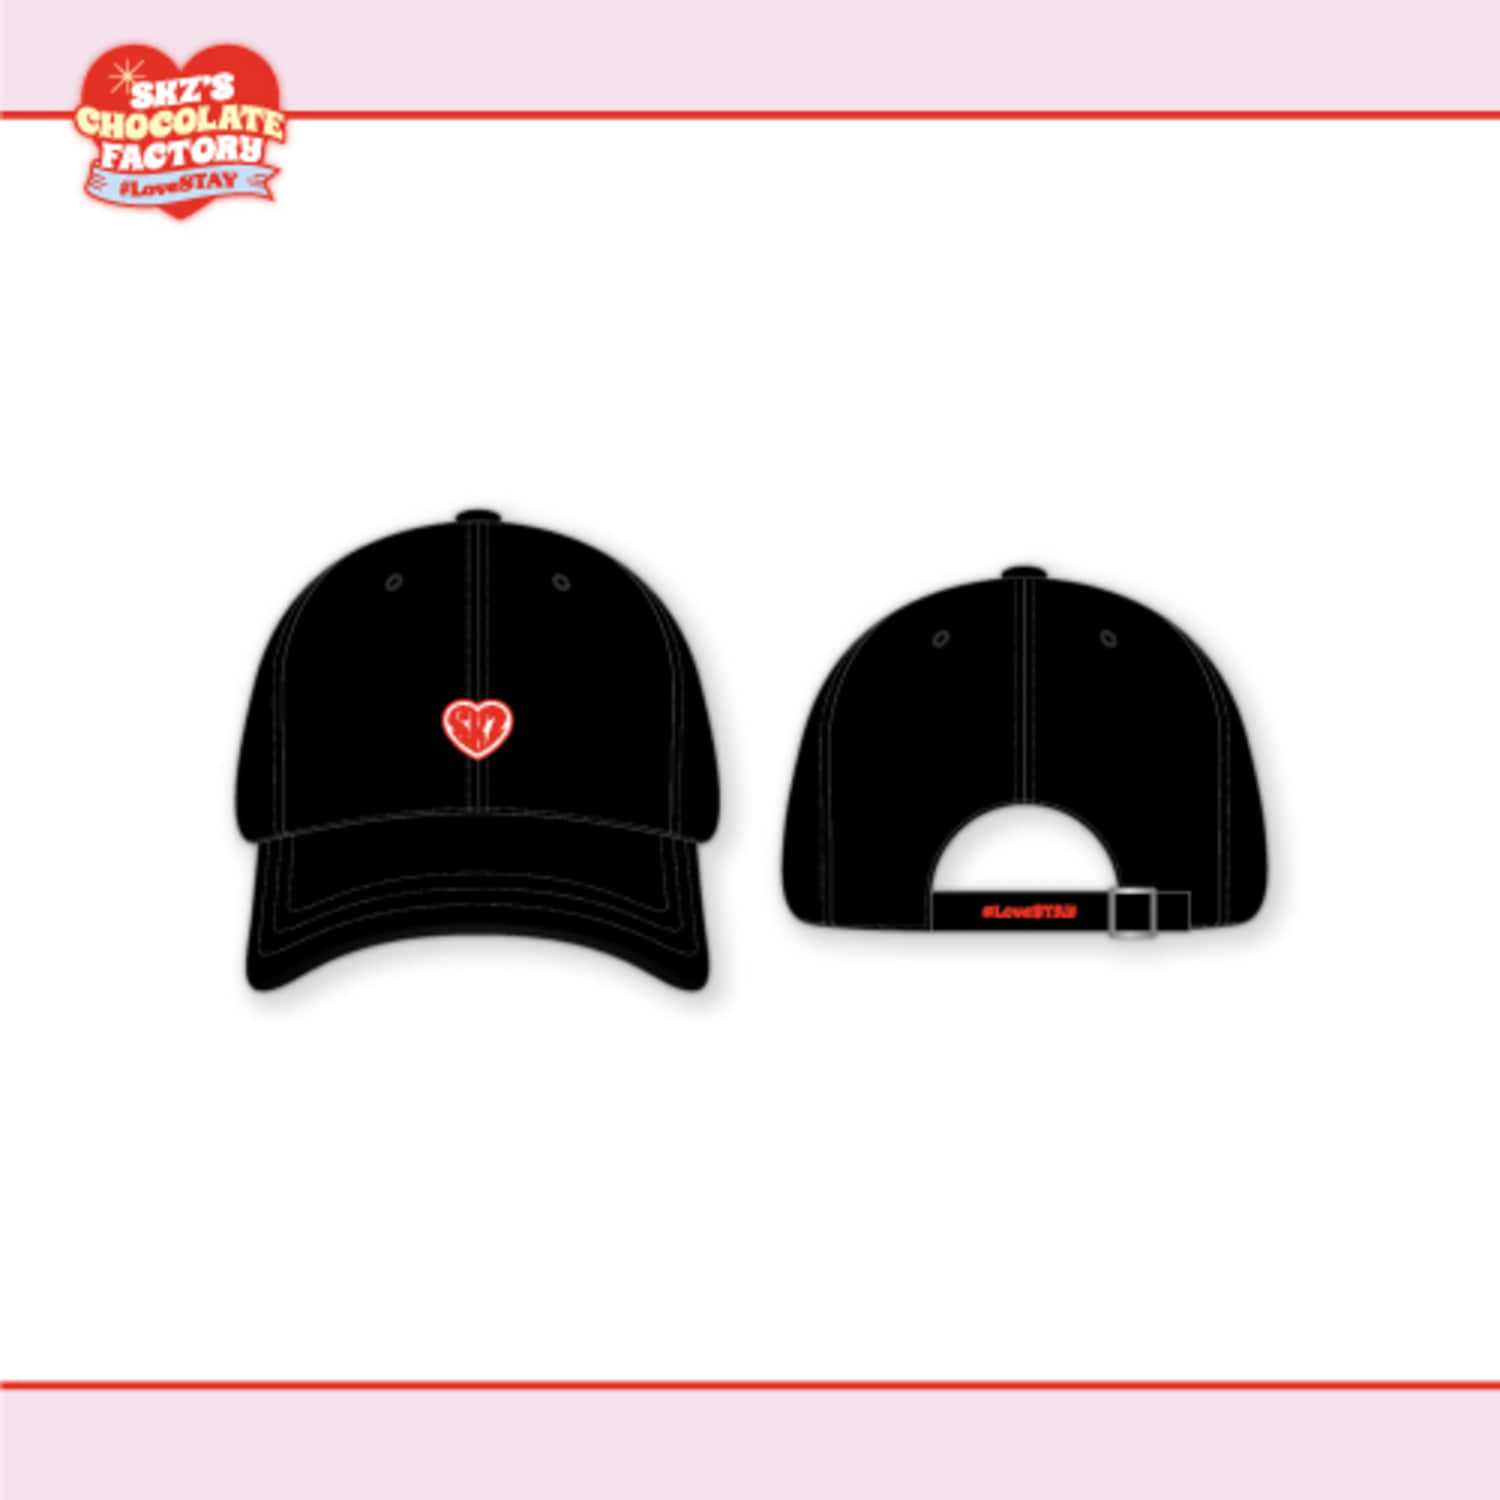 STRAY KIDS(스트레이 키즈) - [2ND#LoveSTAY &#039;SKZ’S CHOCOLATE FACTORY] 볼캡 BALL CAP